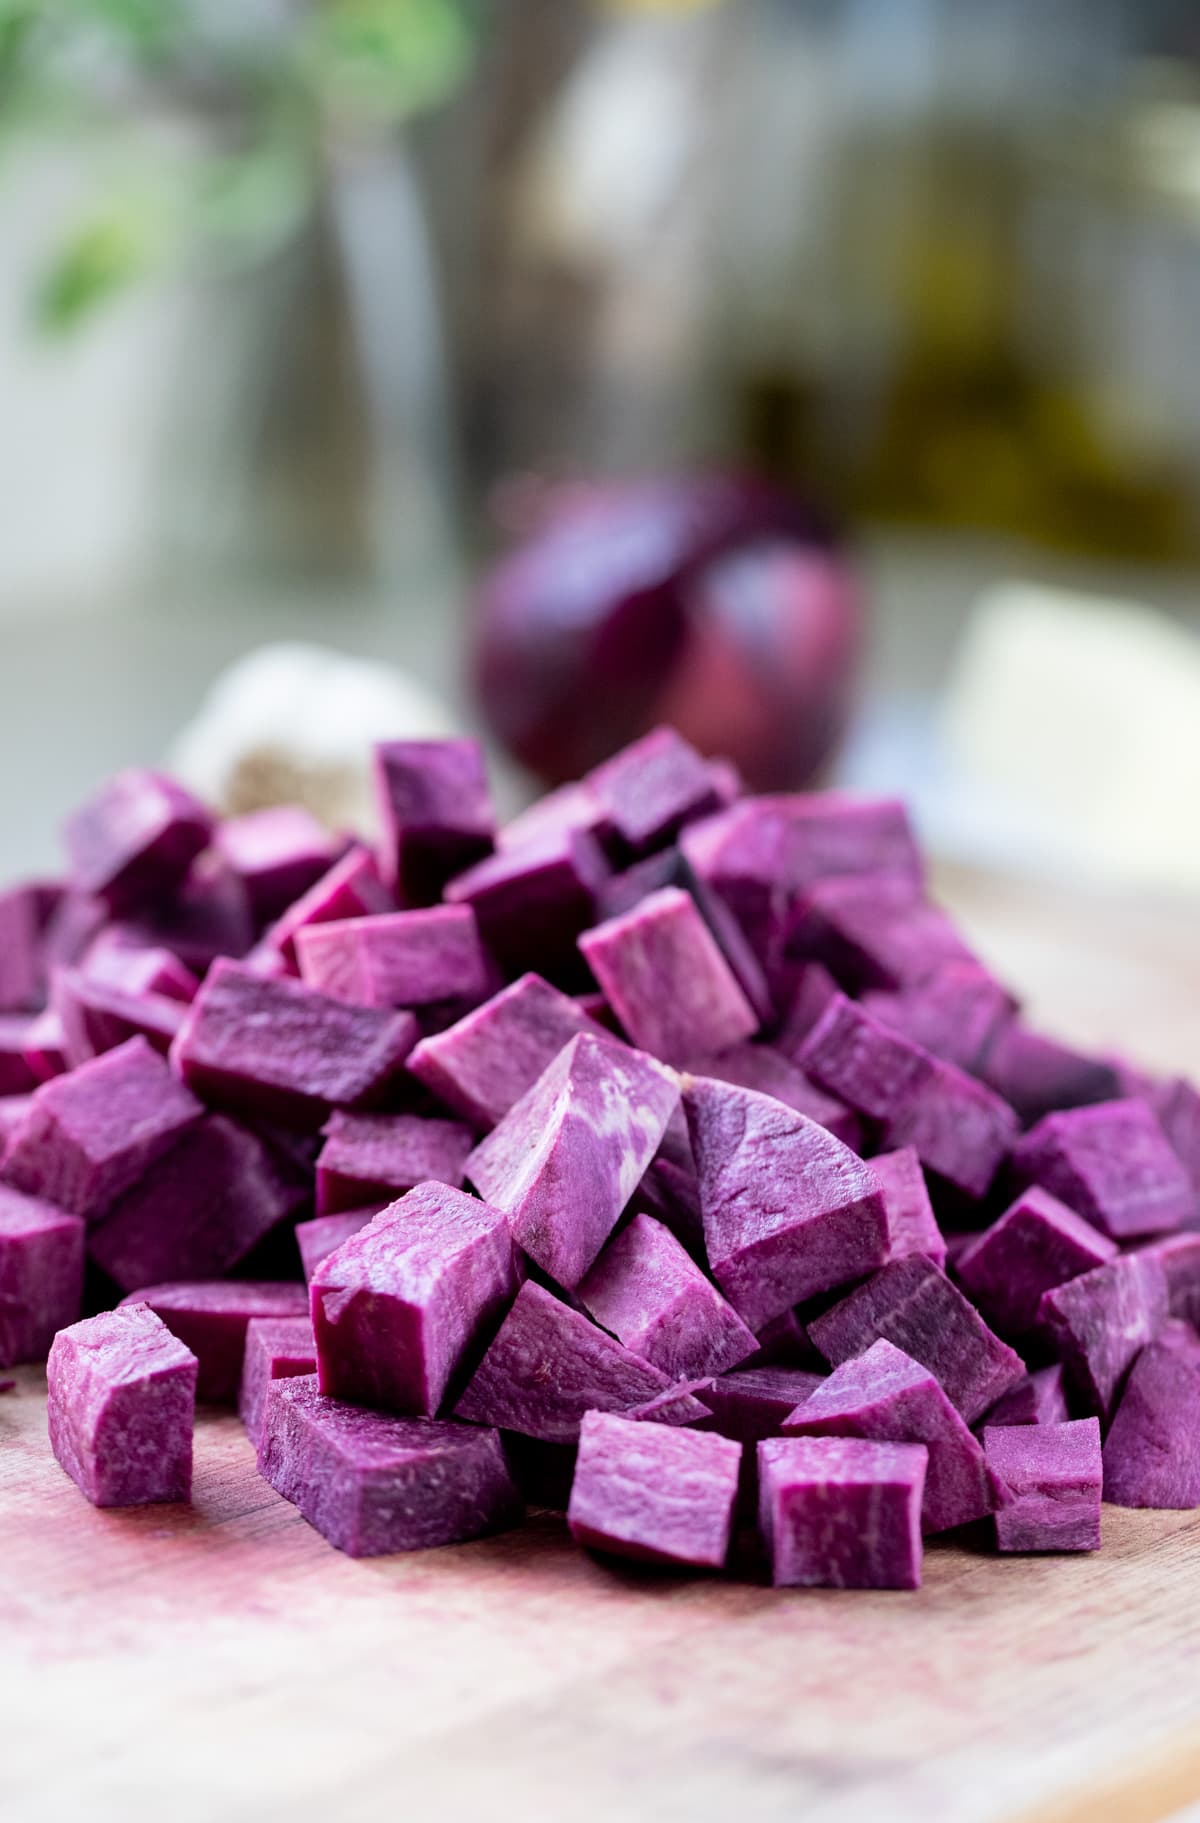 diced purple sweet potatoes